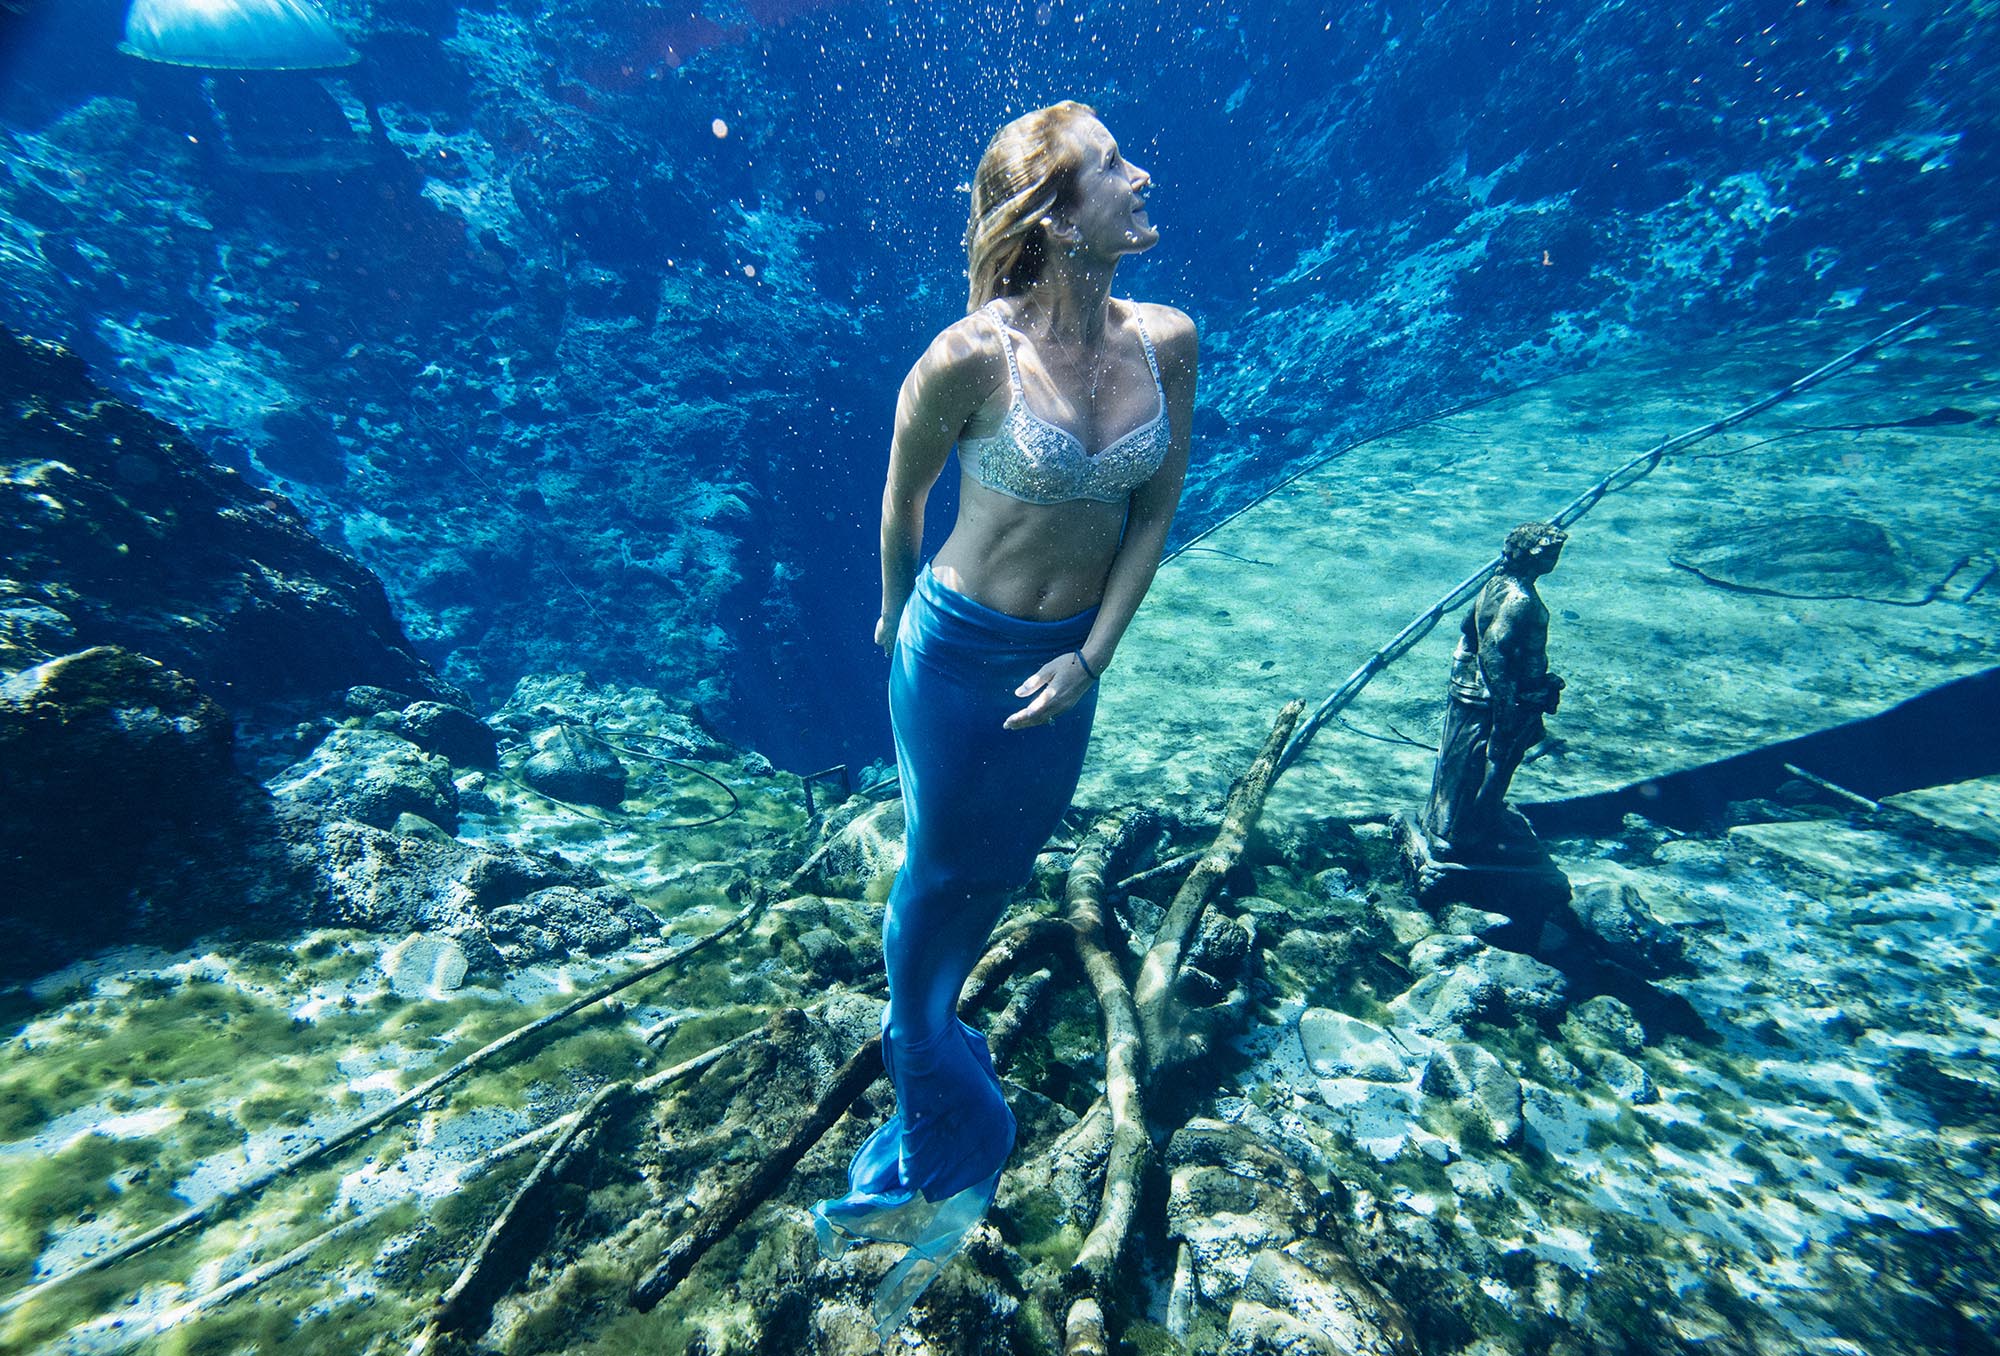 Tampa editorial photographer Bob Croslin mermaid theme park weird florida